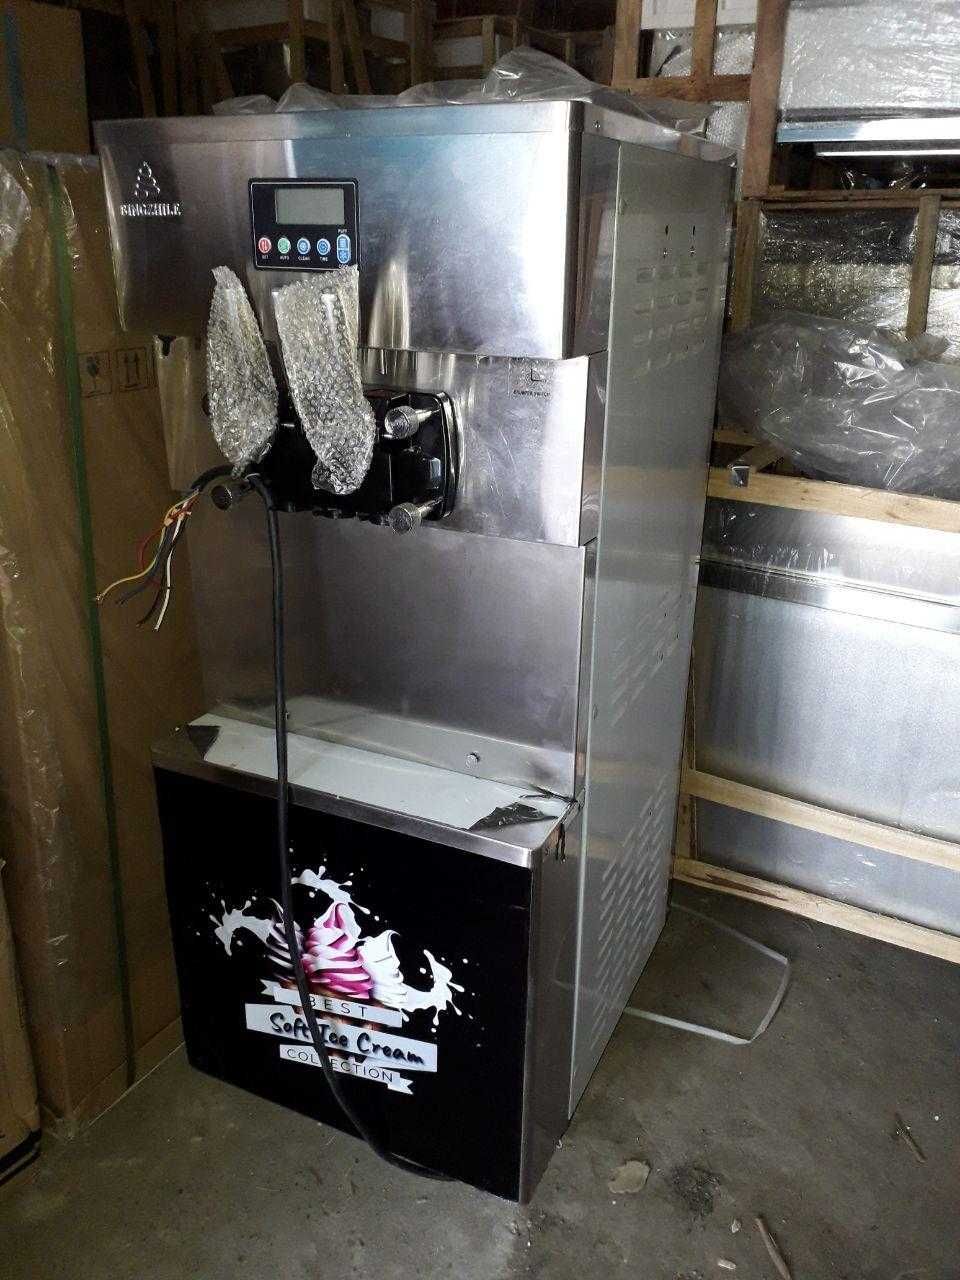 Мороженной аппарат Bingziling